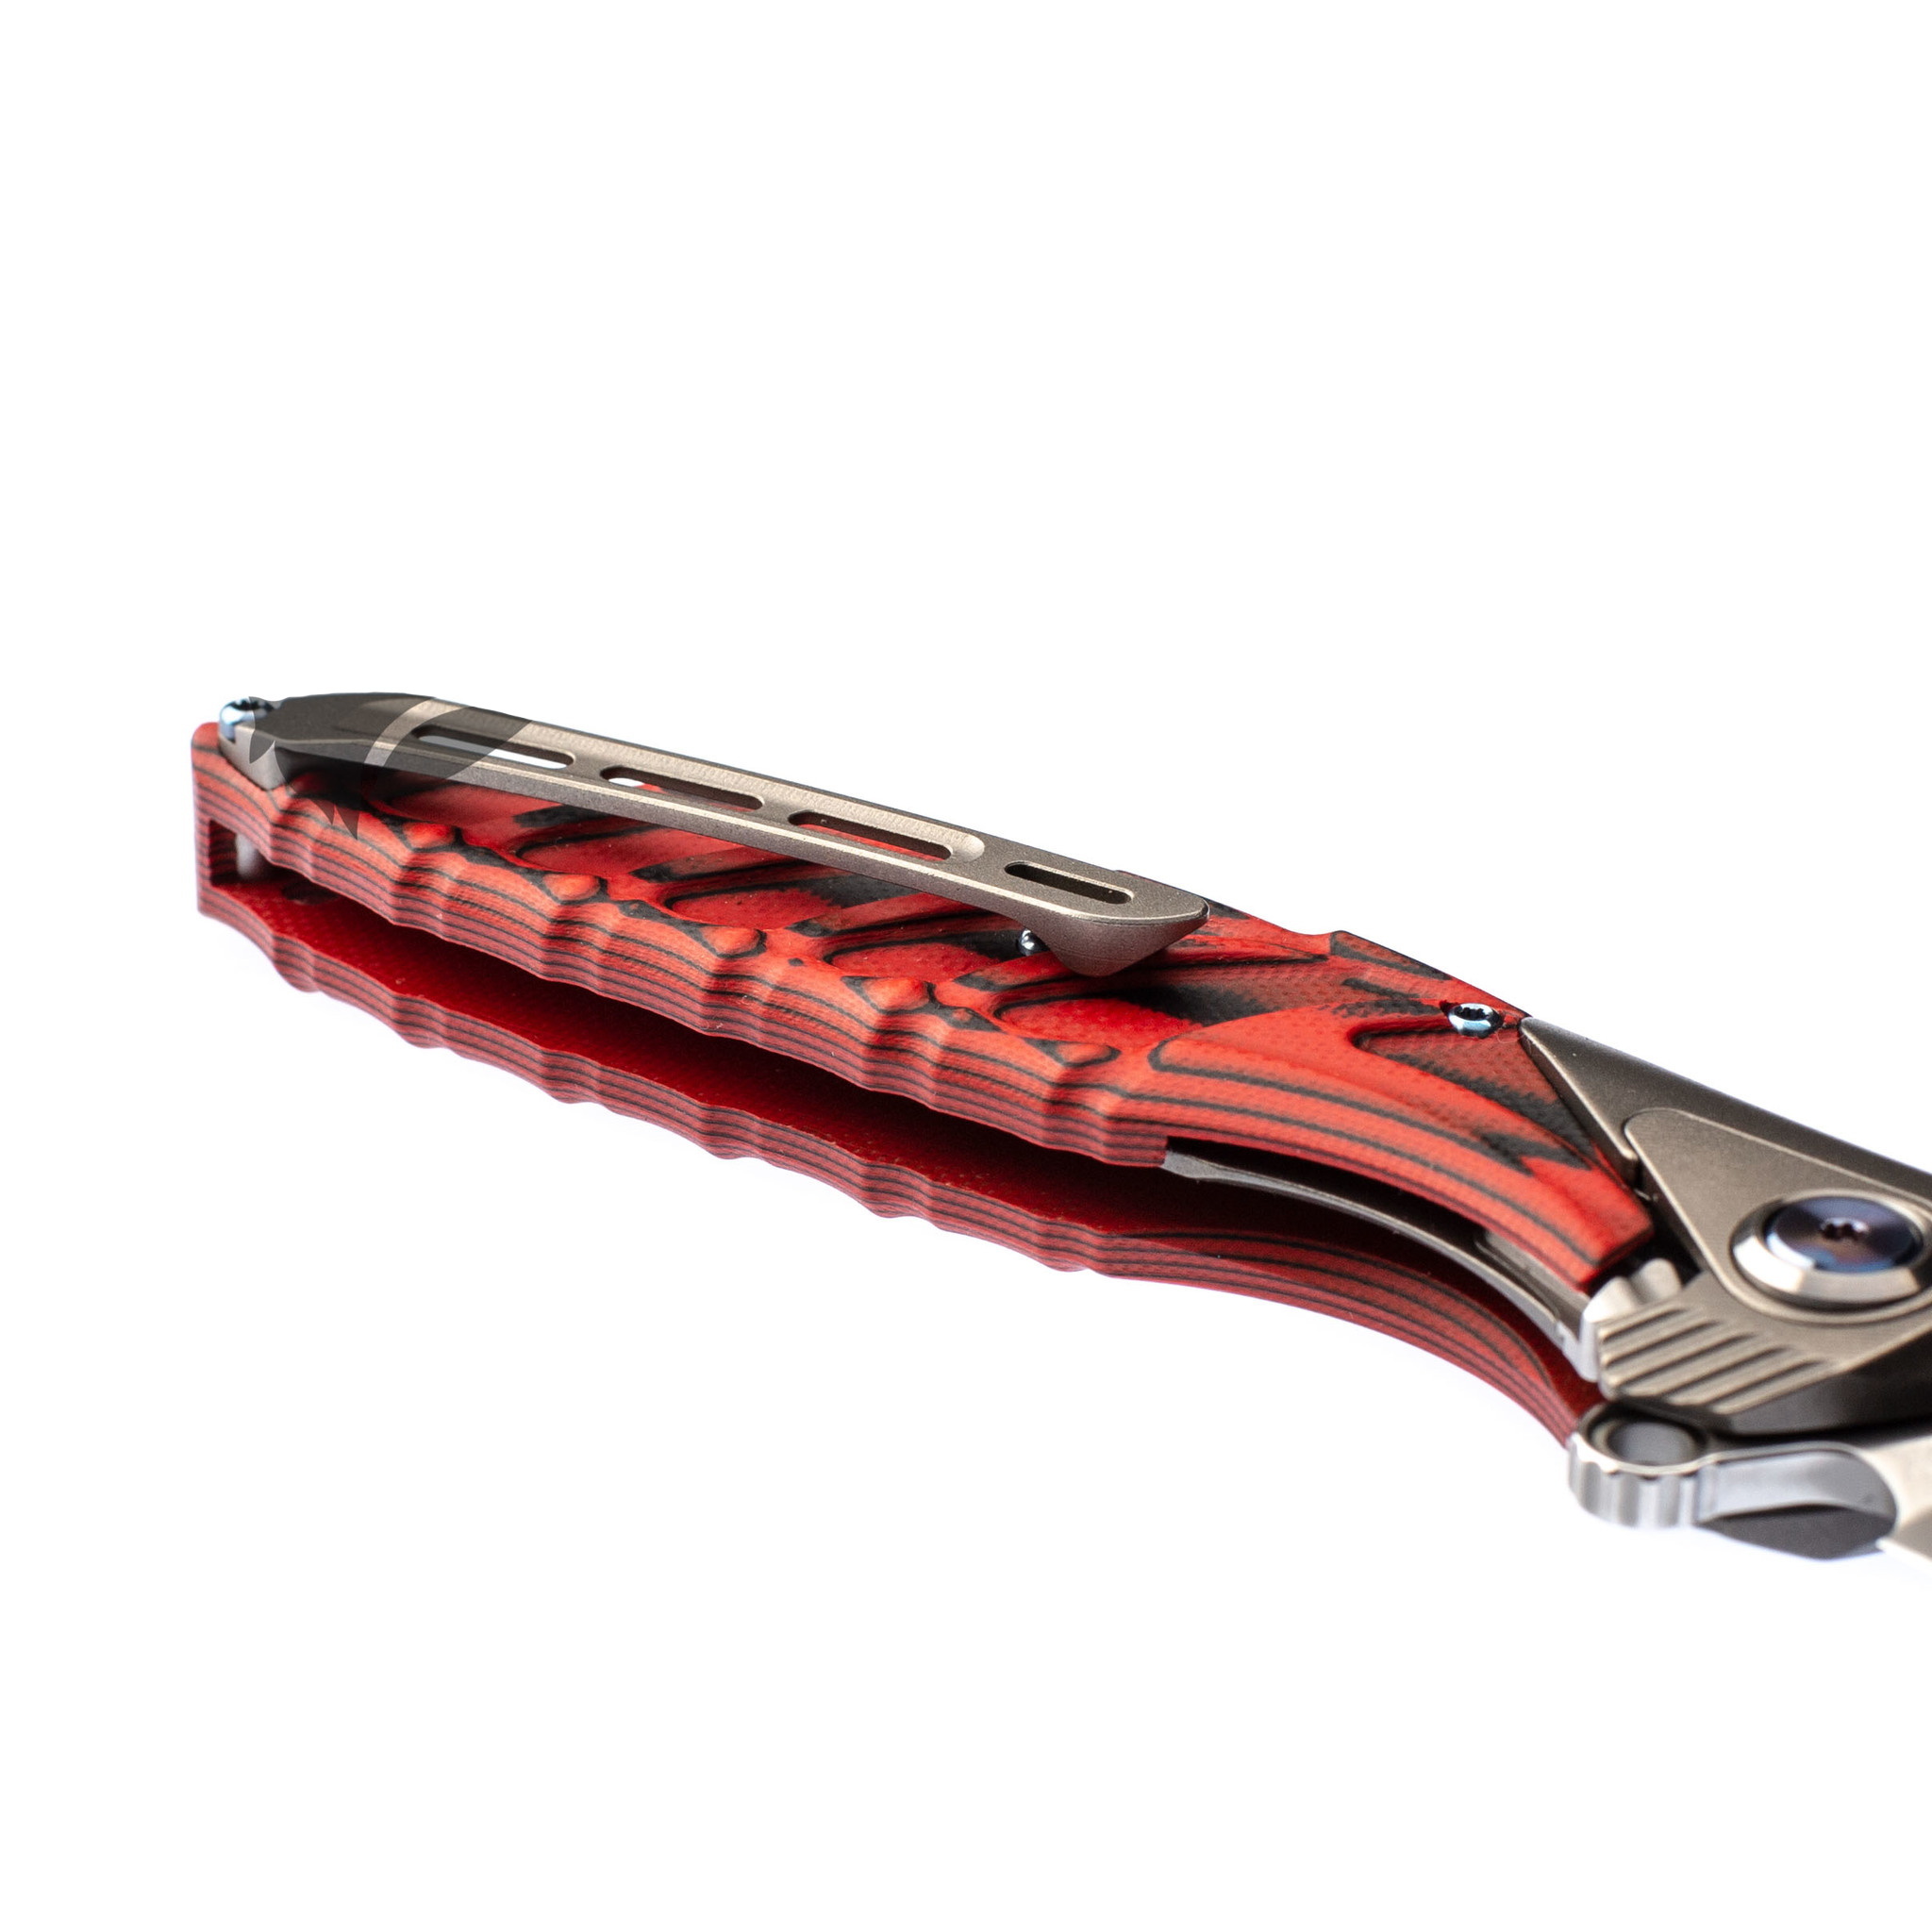 Нож складной Thor 7 Rikeknife, сталь 154CM, Red Titanium/G10 - фото 3